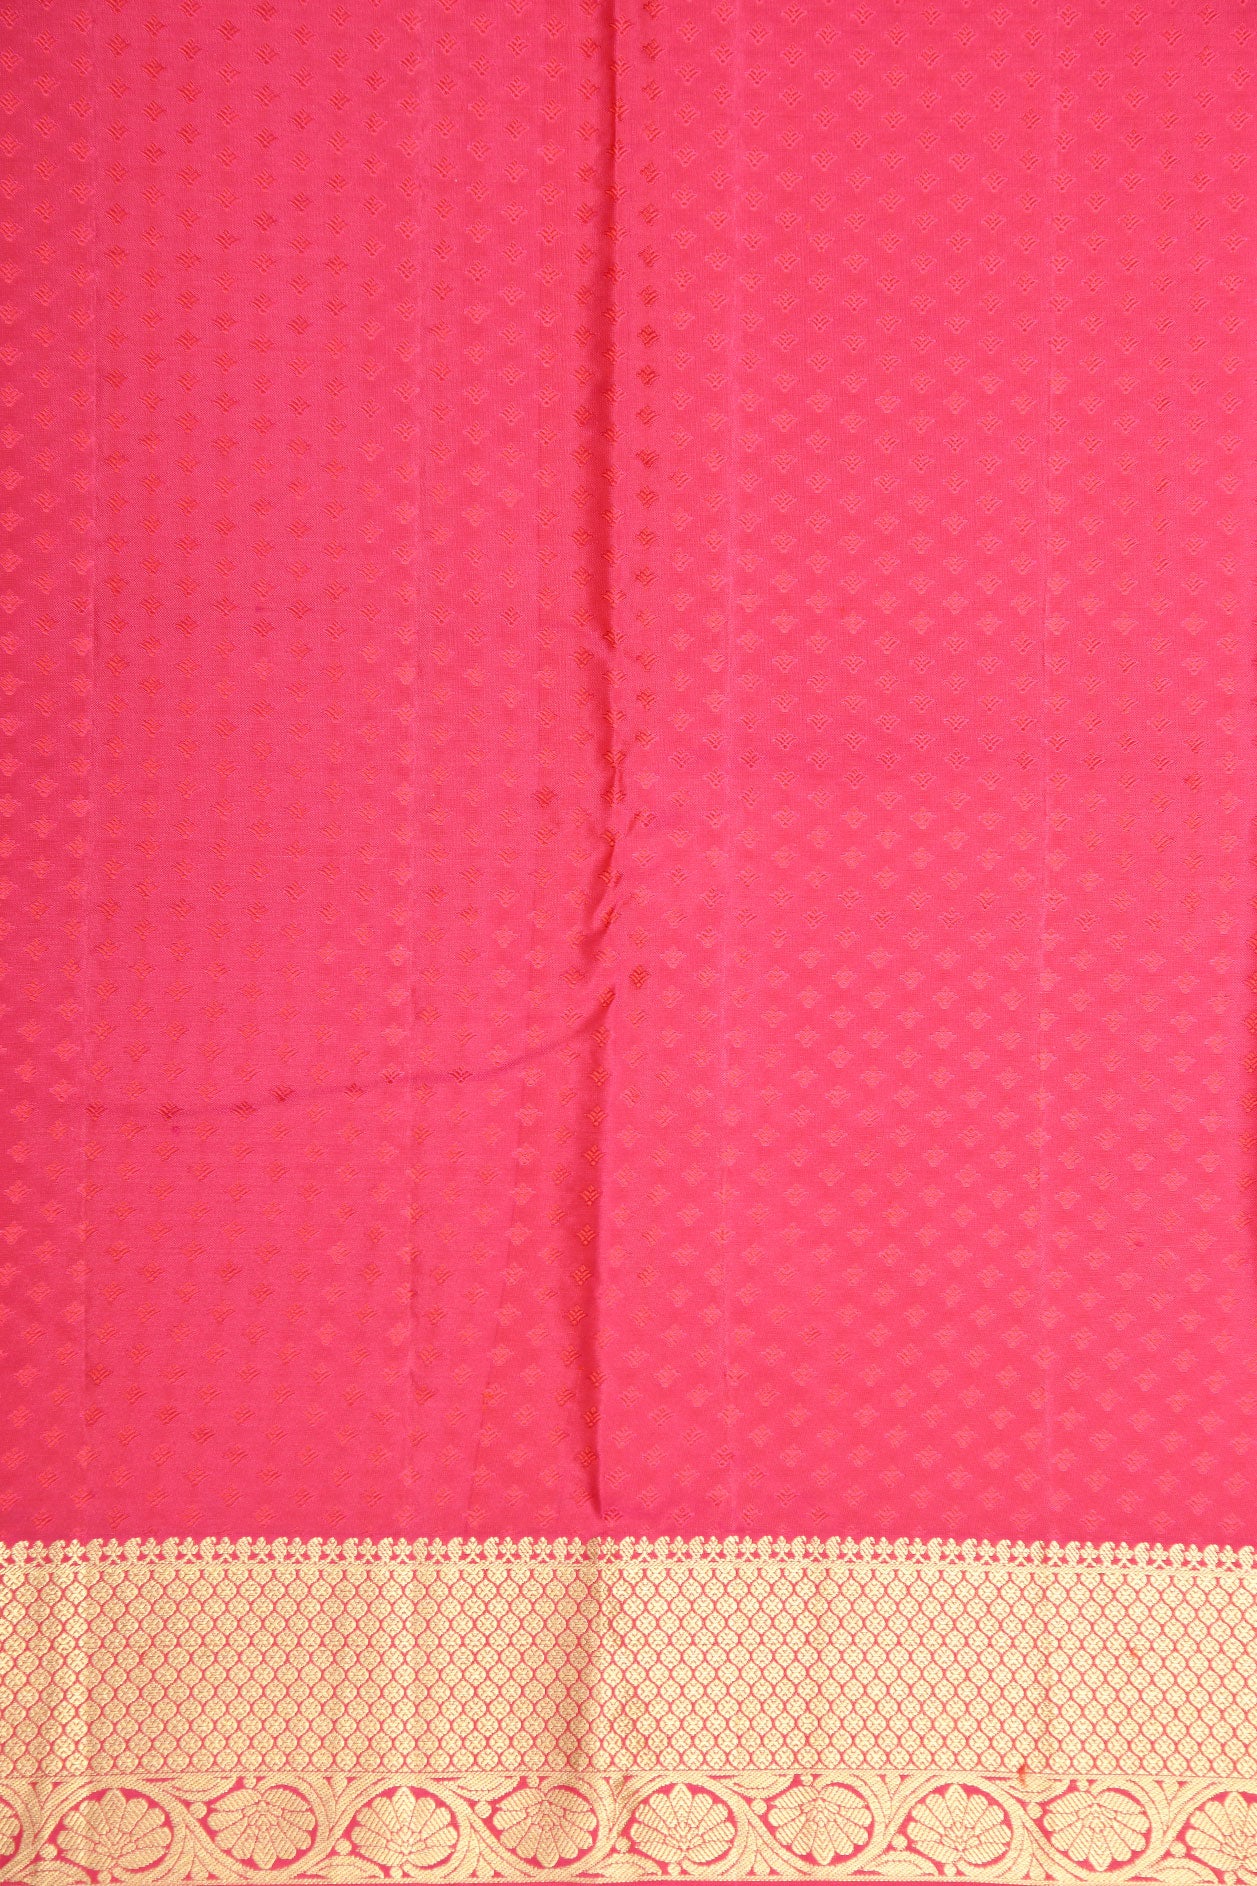 Honeycomb Border With Self Jacquard Weaving Orange Kanchipuram Silk Saree